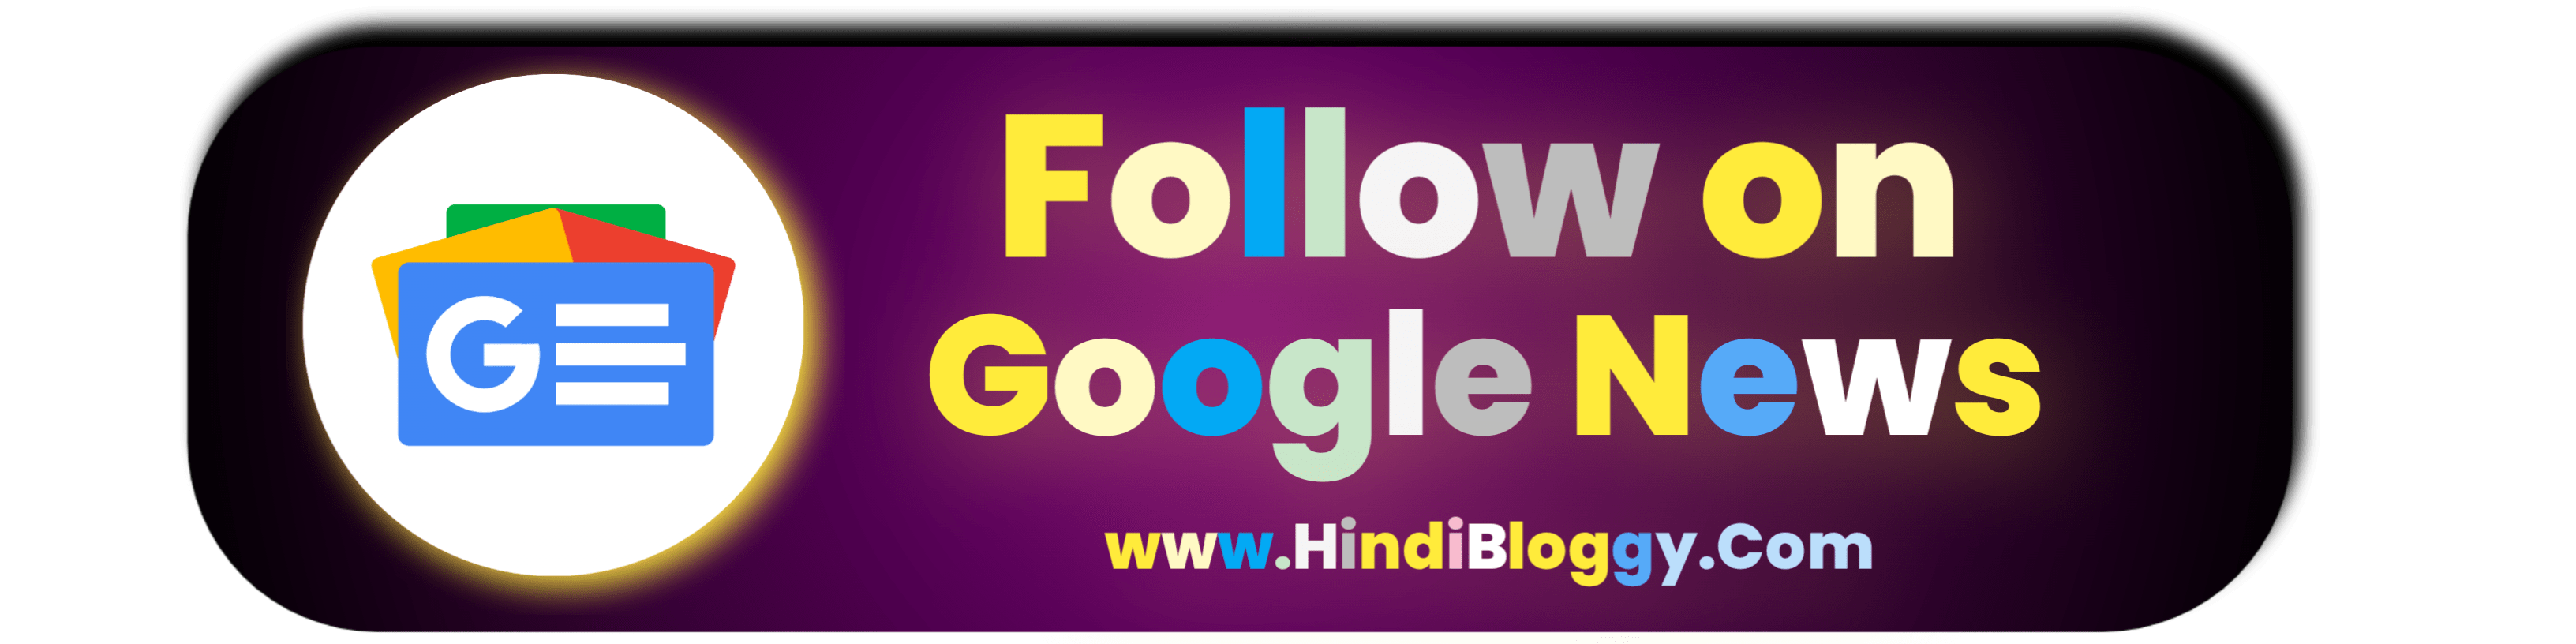 Follow on Google news - hindibloggy.com